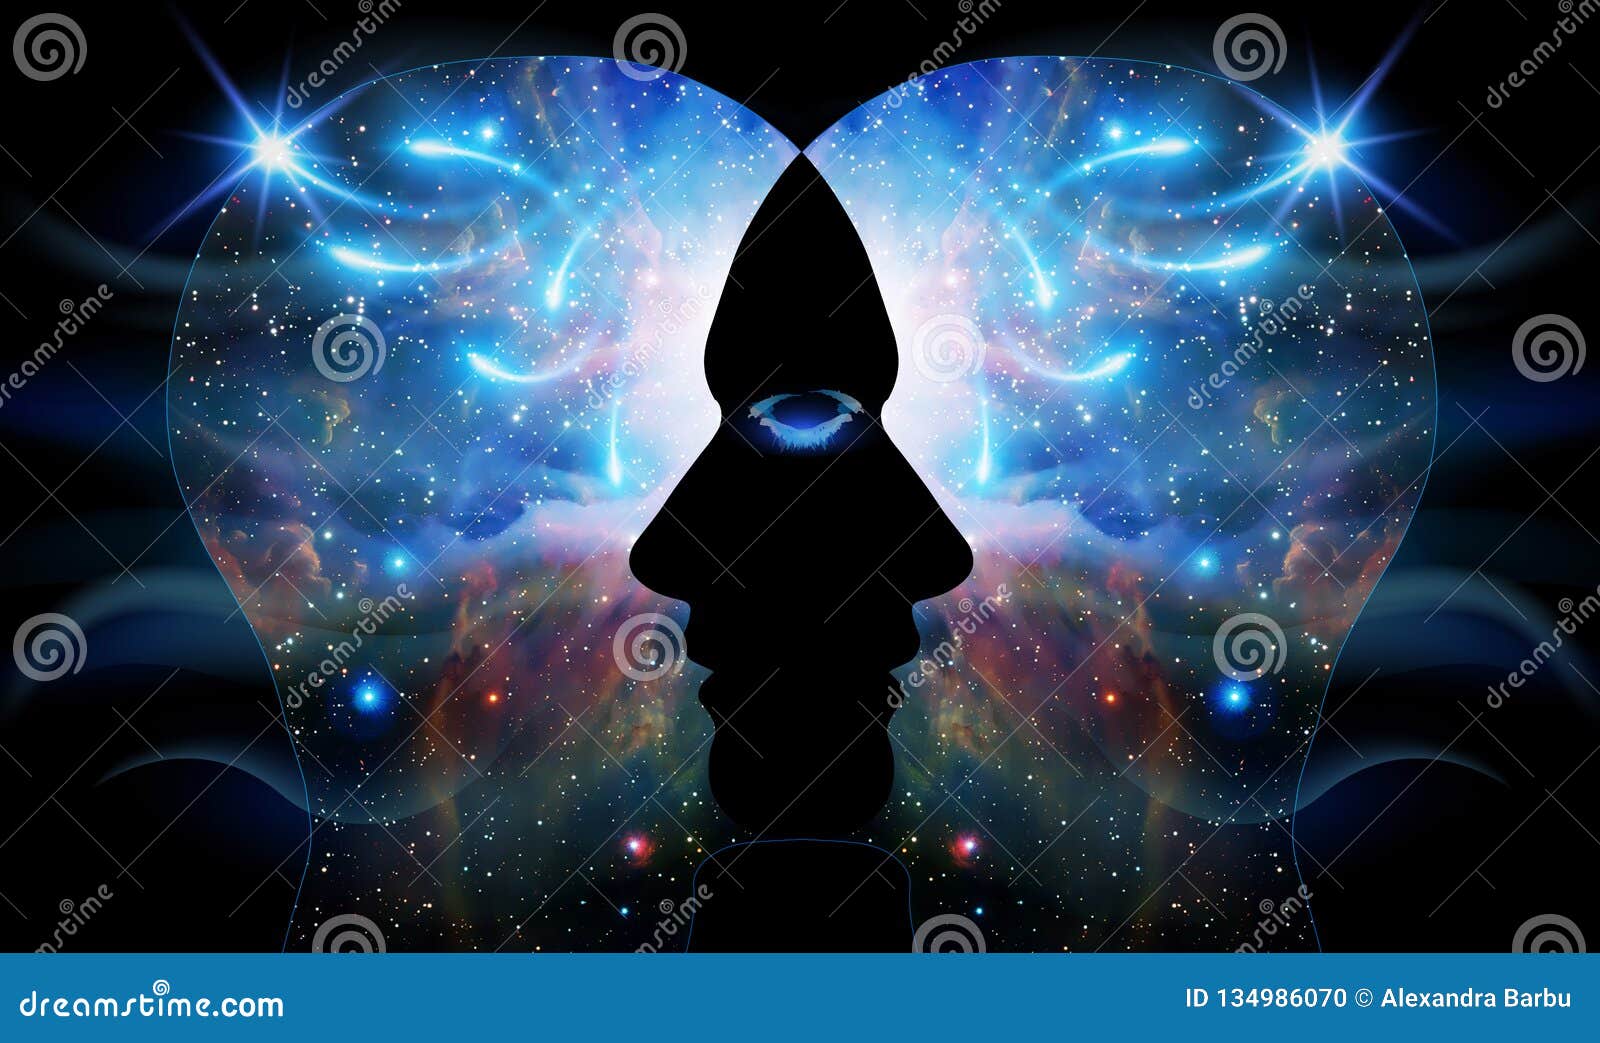 human head universe inspiration enlightenment unity consciousness